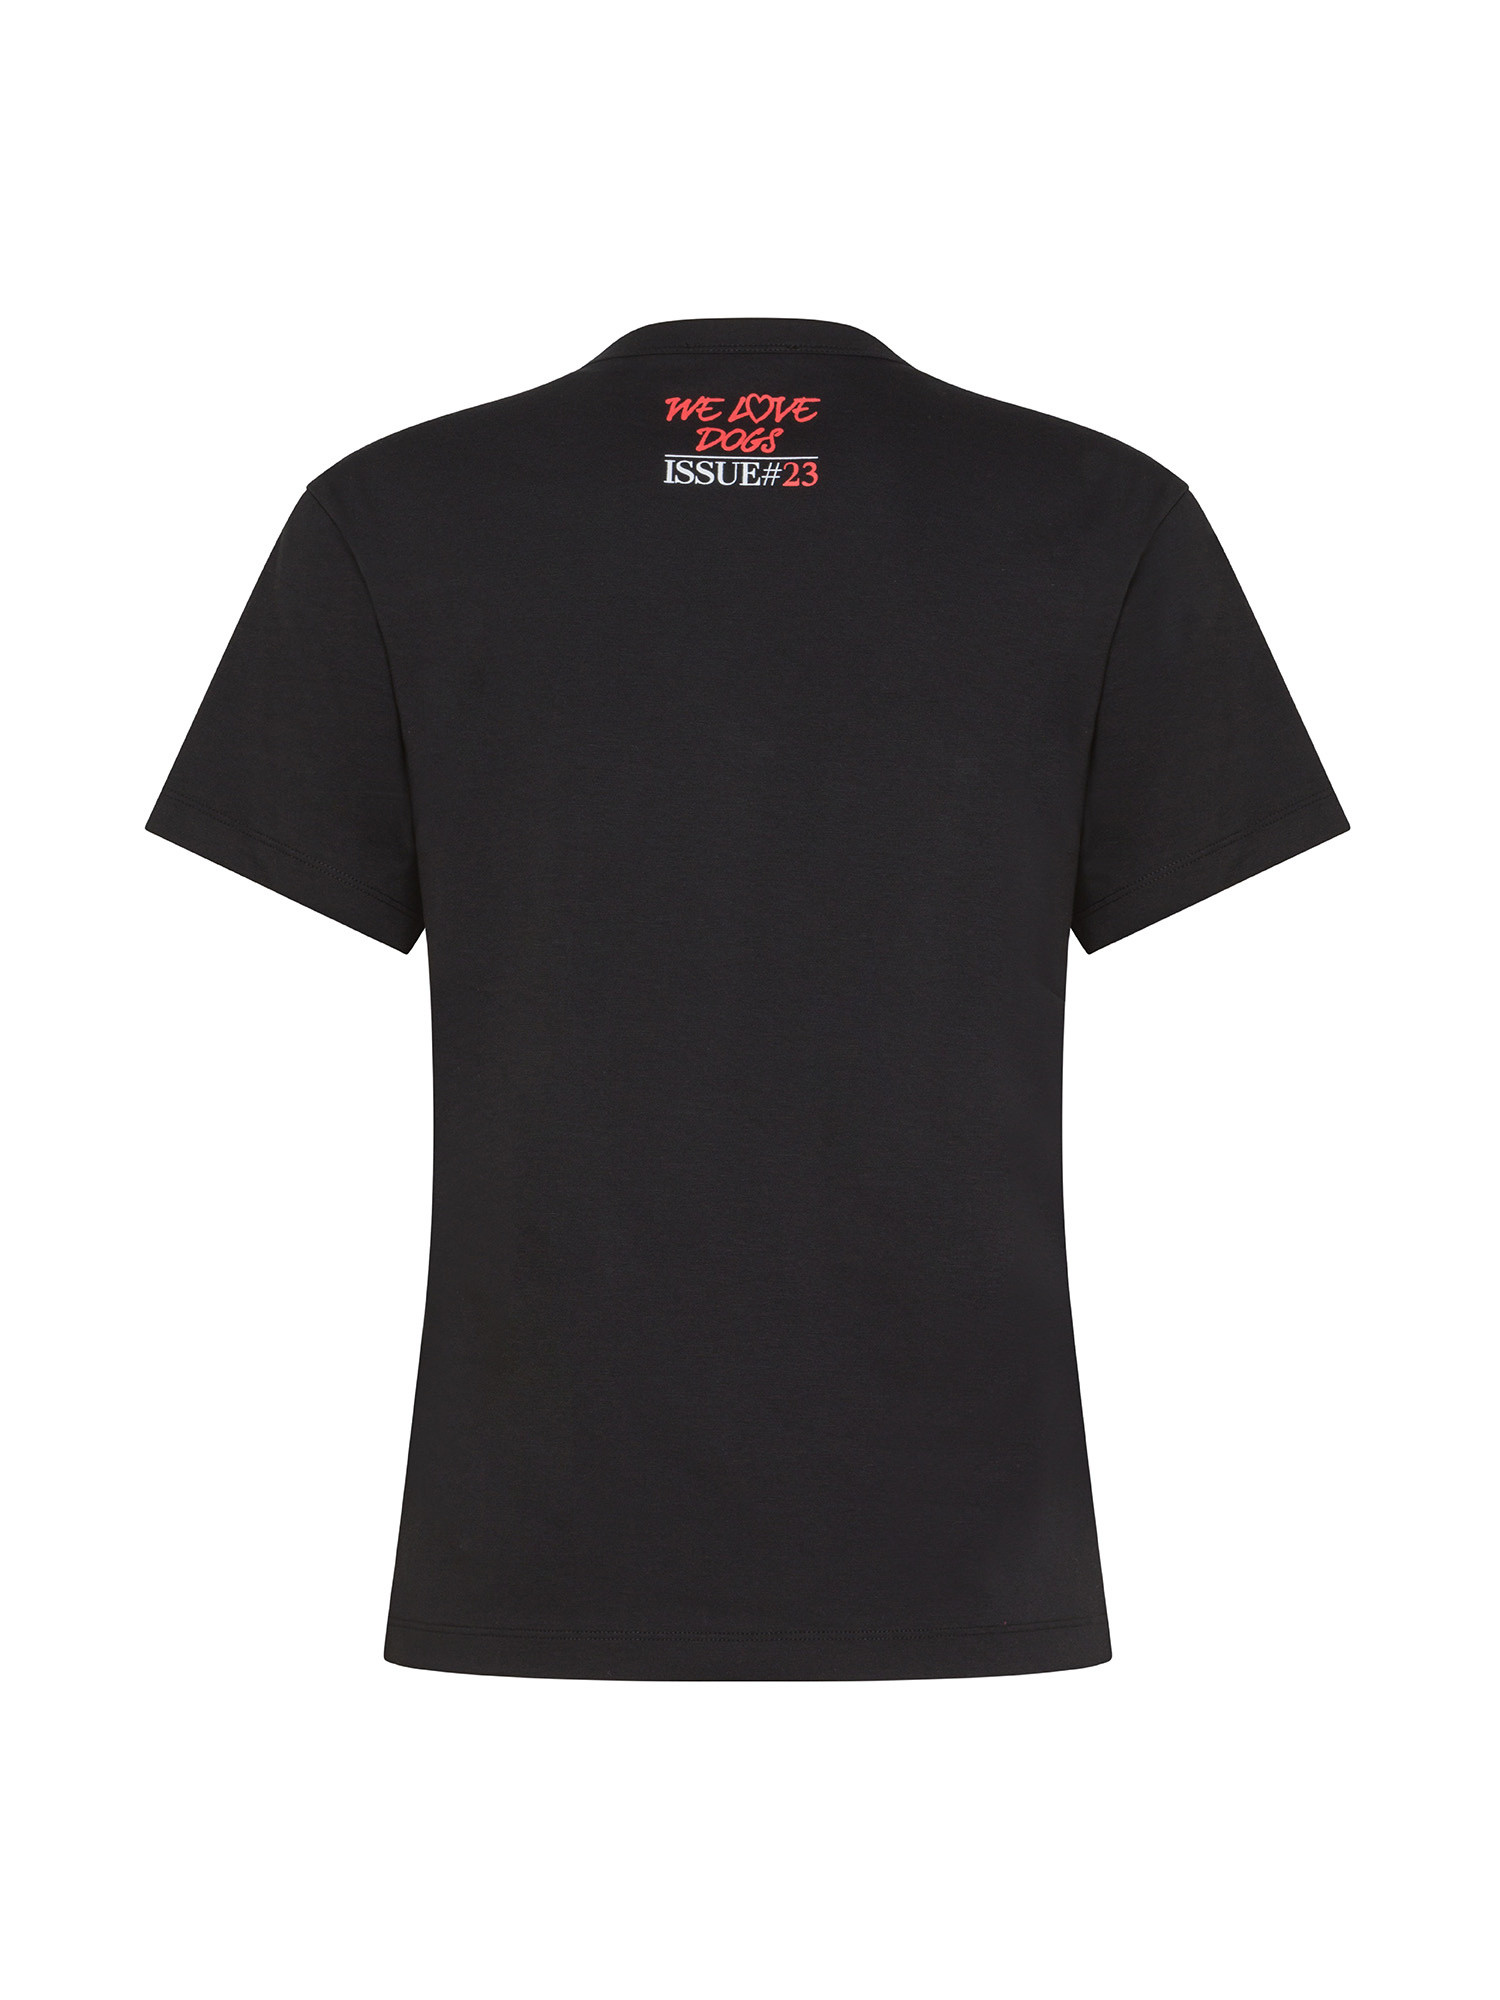 Emporio Armani - T-shirt in cotone con logo, Nero, large image number 1